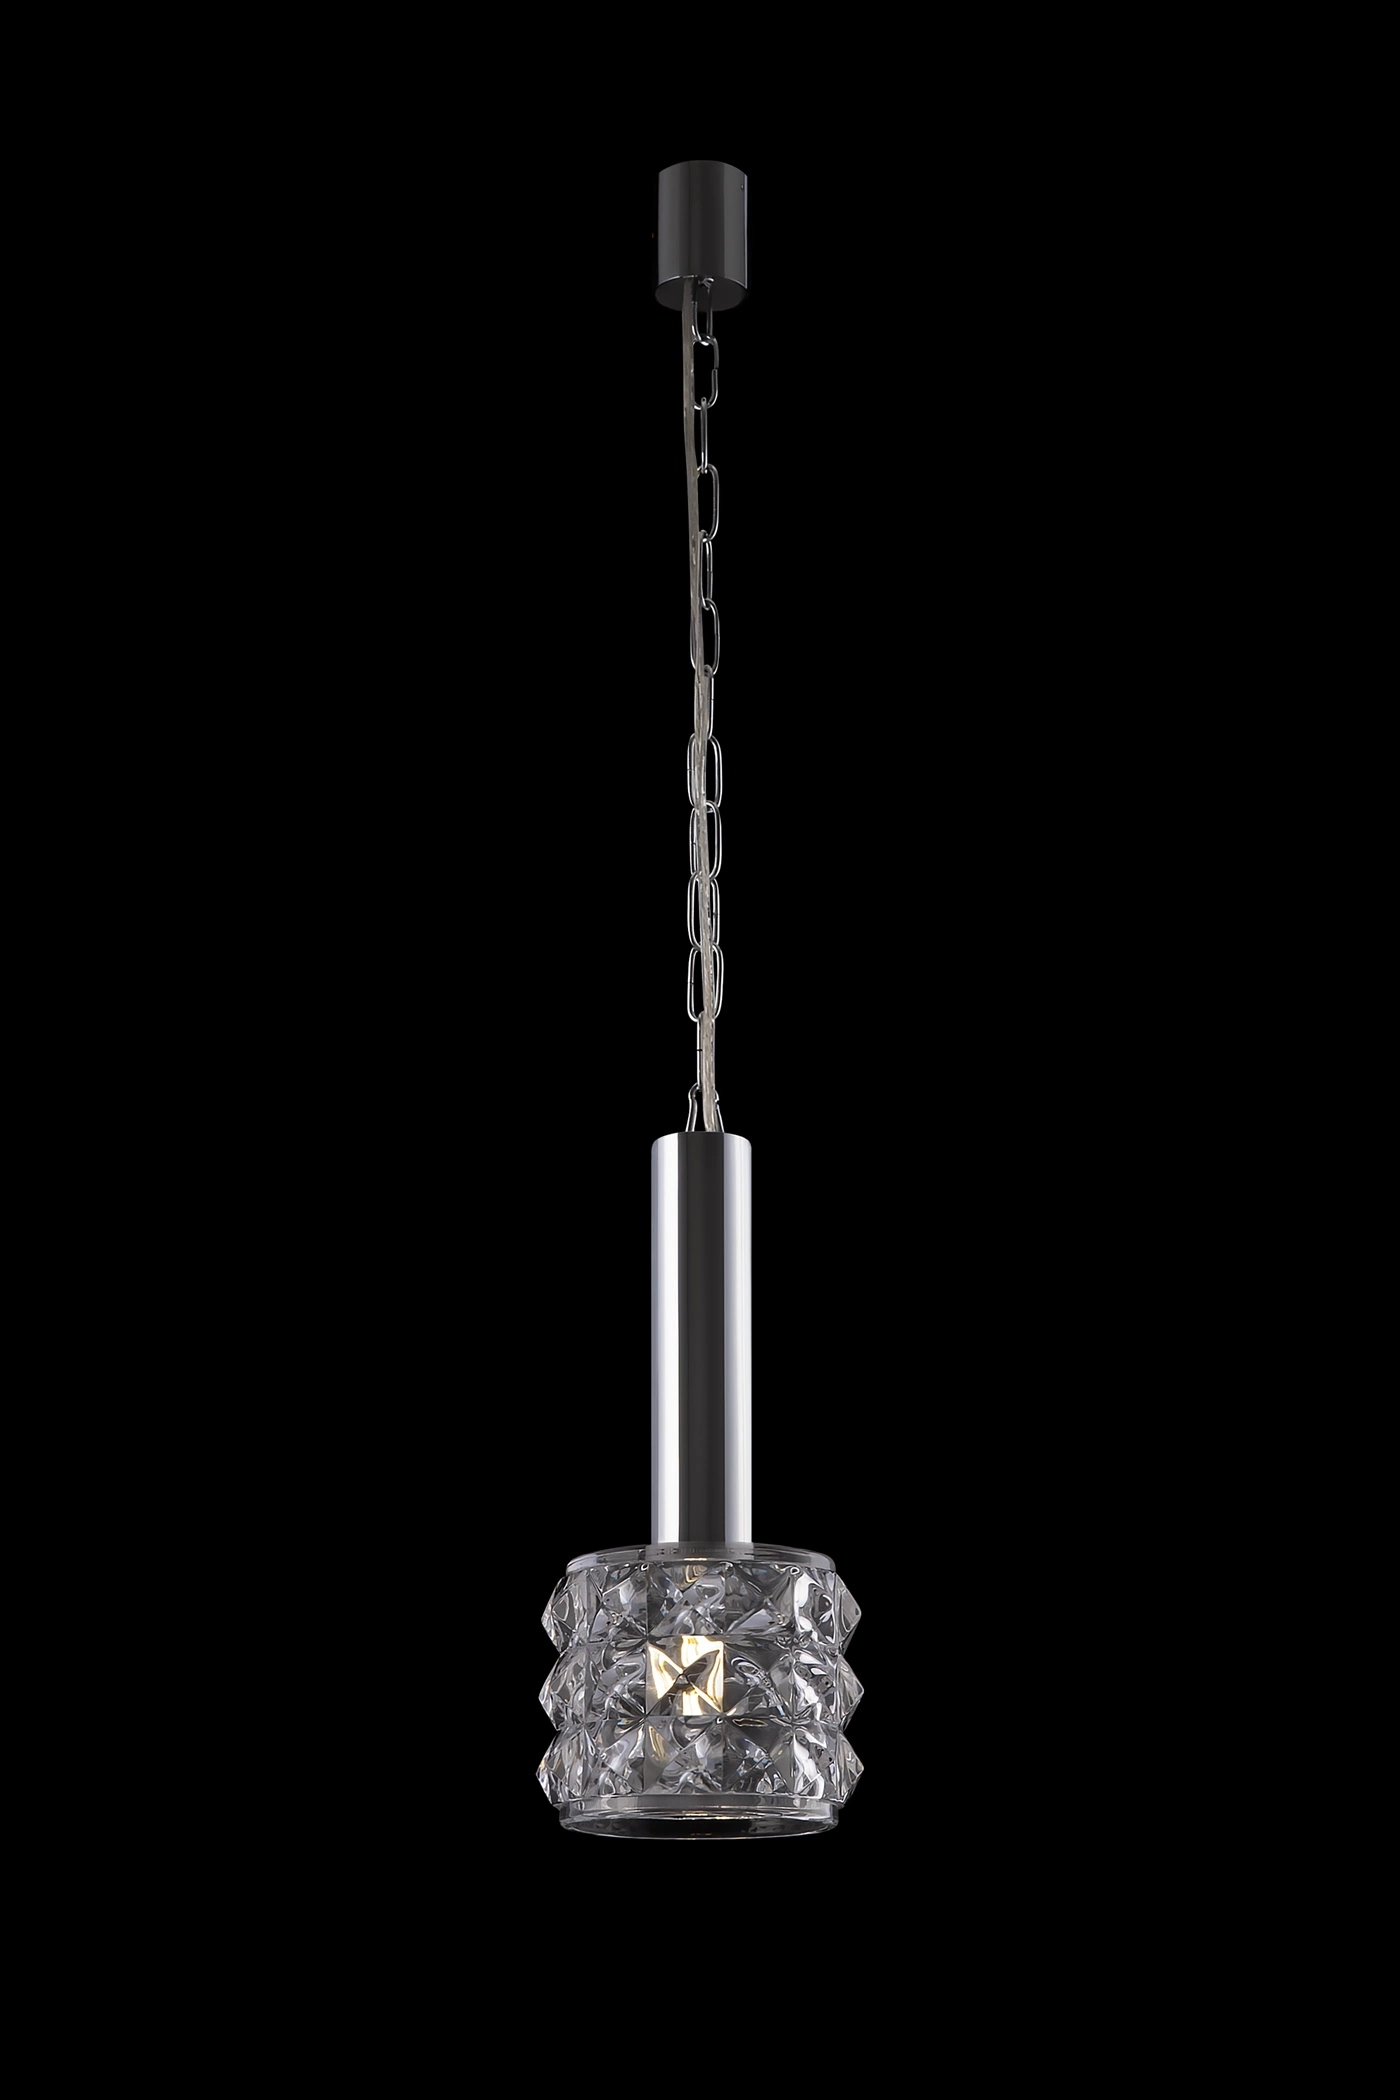   
                        
                        Люстра MAYTONI (Германия) 50733    
                         в стиле Модерн.  
                        Тип источника света: светодиодная лампа, сменная.                         Форма: Цилиндр.                         Цвета плафонов и подвесок: Прозрачный.                         Материал: Стекло.                          фото 3